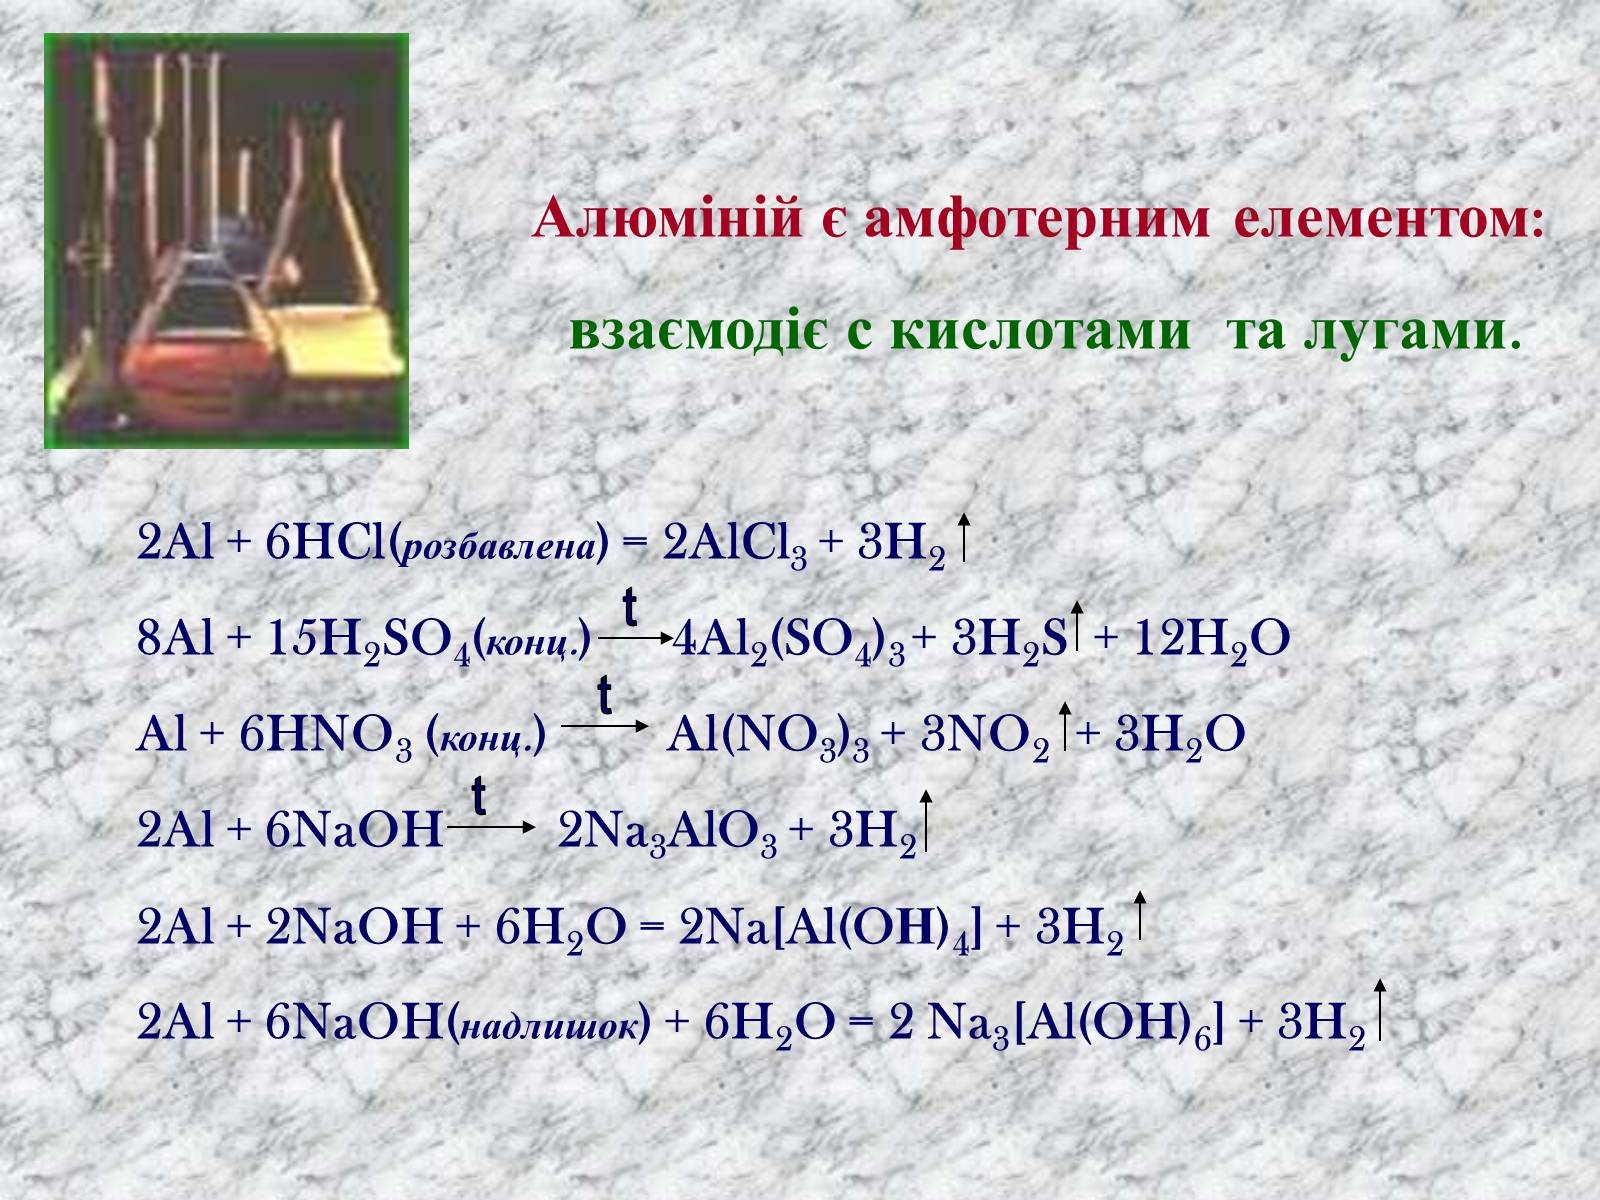 Al h2so4 продукт реакции. Al HCL конц. 2al 6hcl 2alcl3 3h2 окислительно восстановительная реакция. Al h2so4 конц h2s. Al+hno3 конц.